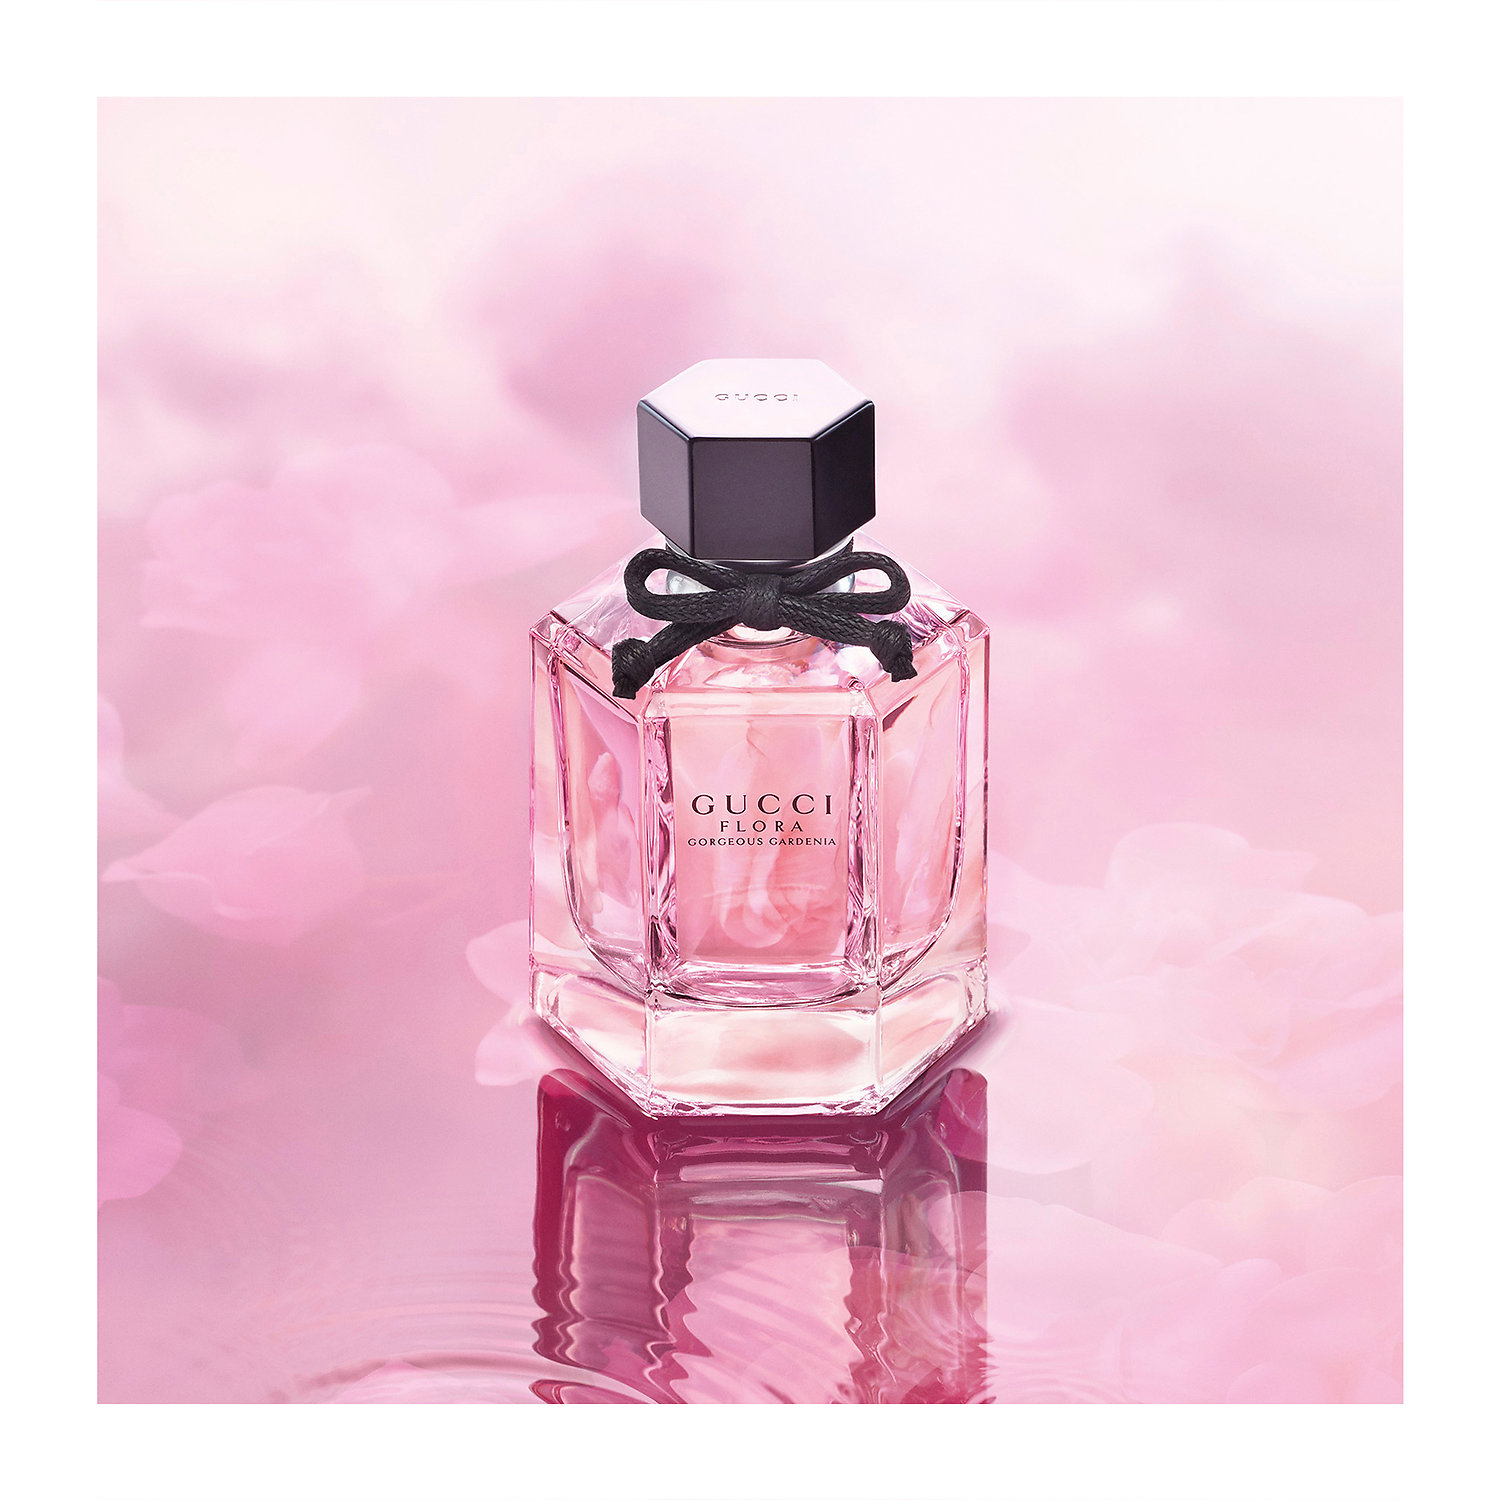 Flora Gorgeous Gardenia Limited Edition Gucci perfumy - to perfumy dla